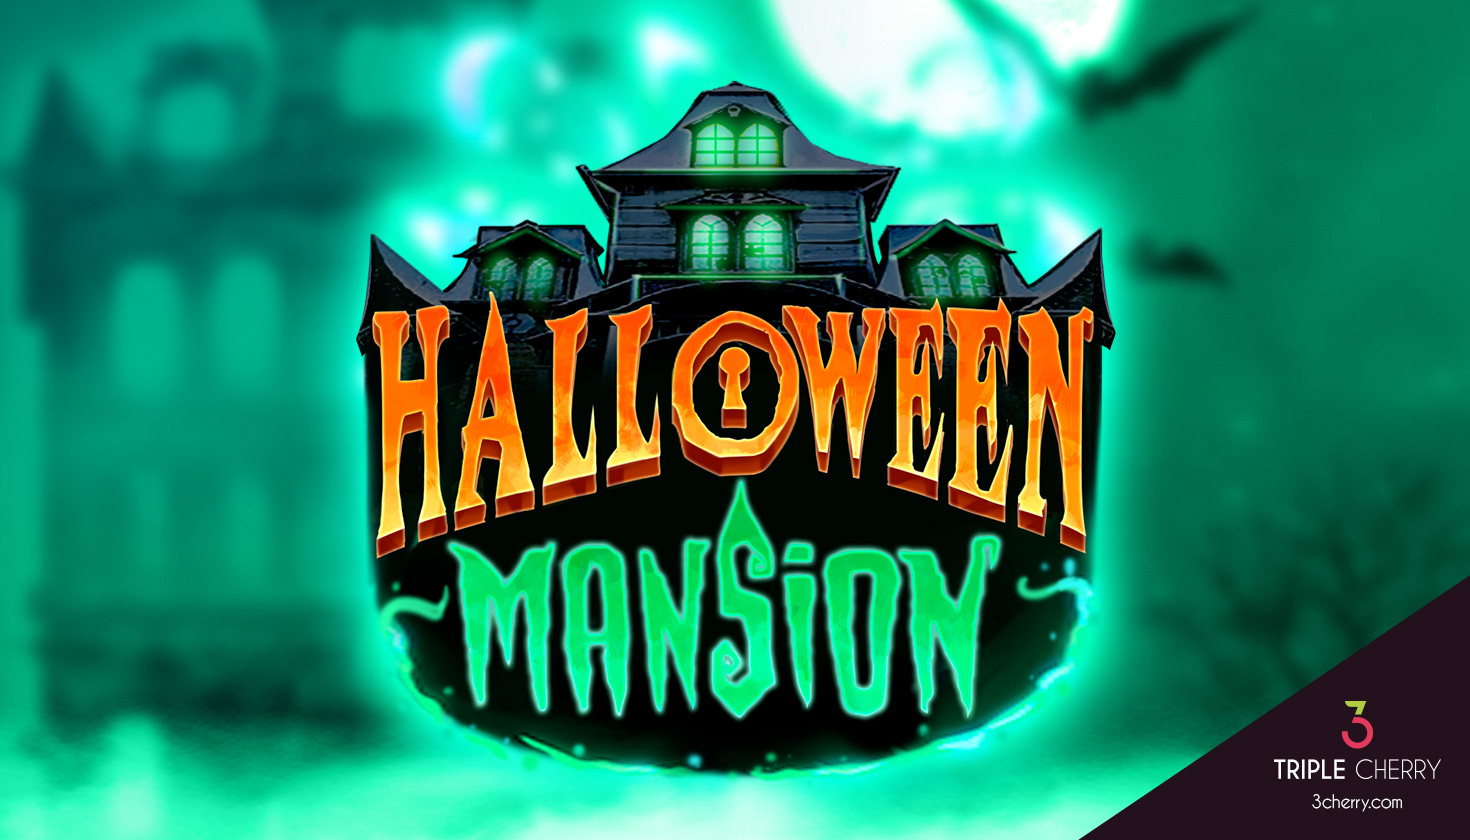 Halloween Mansion - slot Triple Cherry